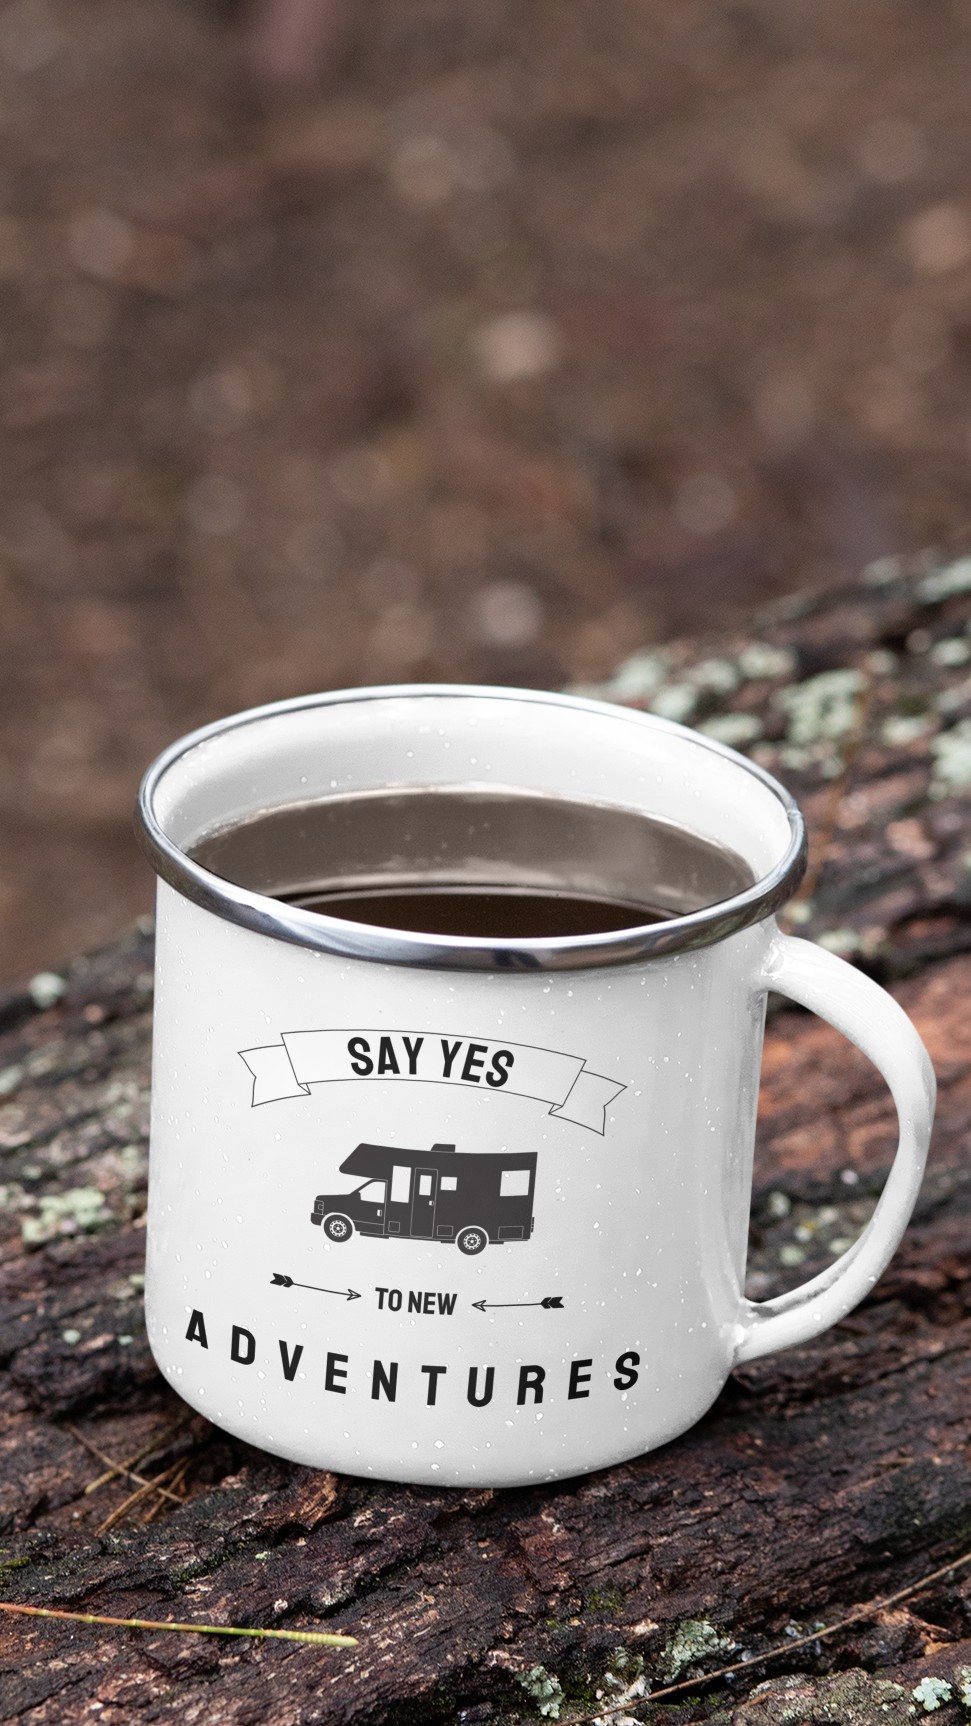 Outdoor Camping Mugs-Coffee Mug 16 Oz-Enamel Travel Mug Cup,Tea